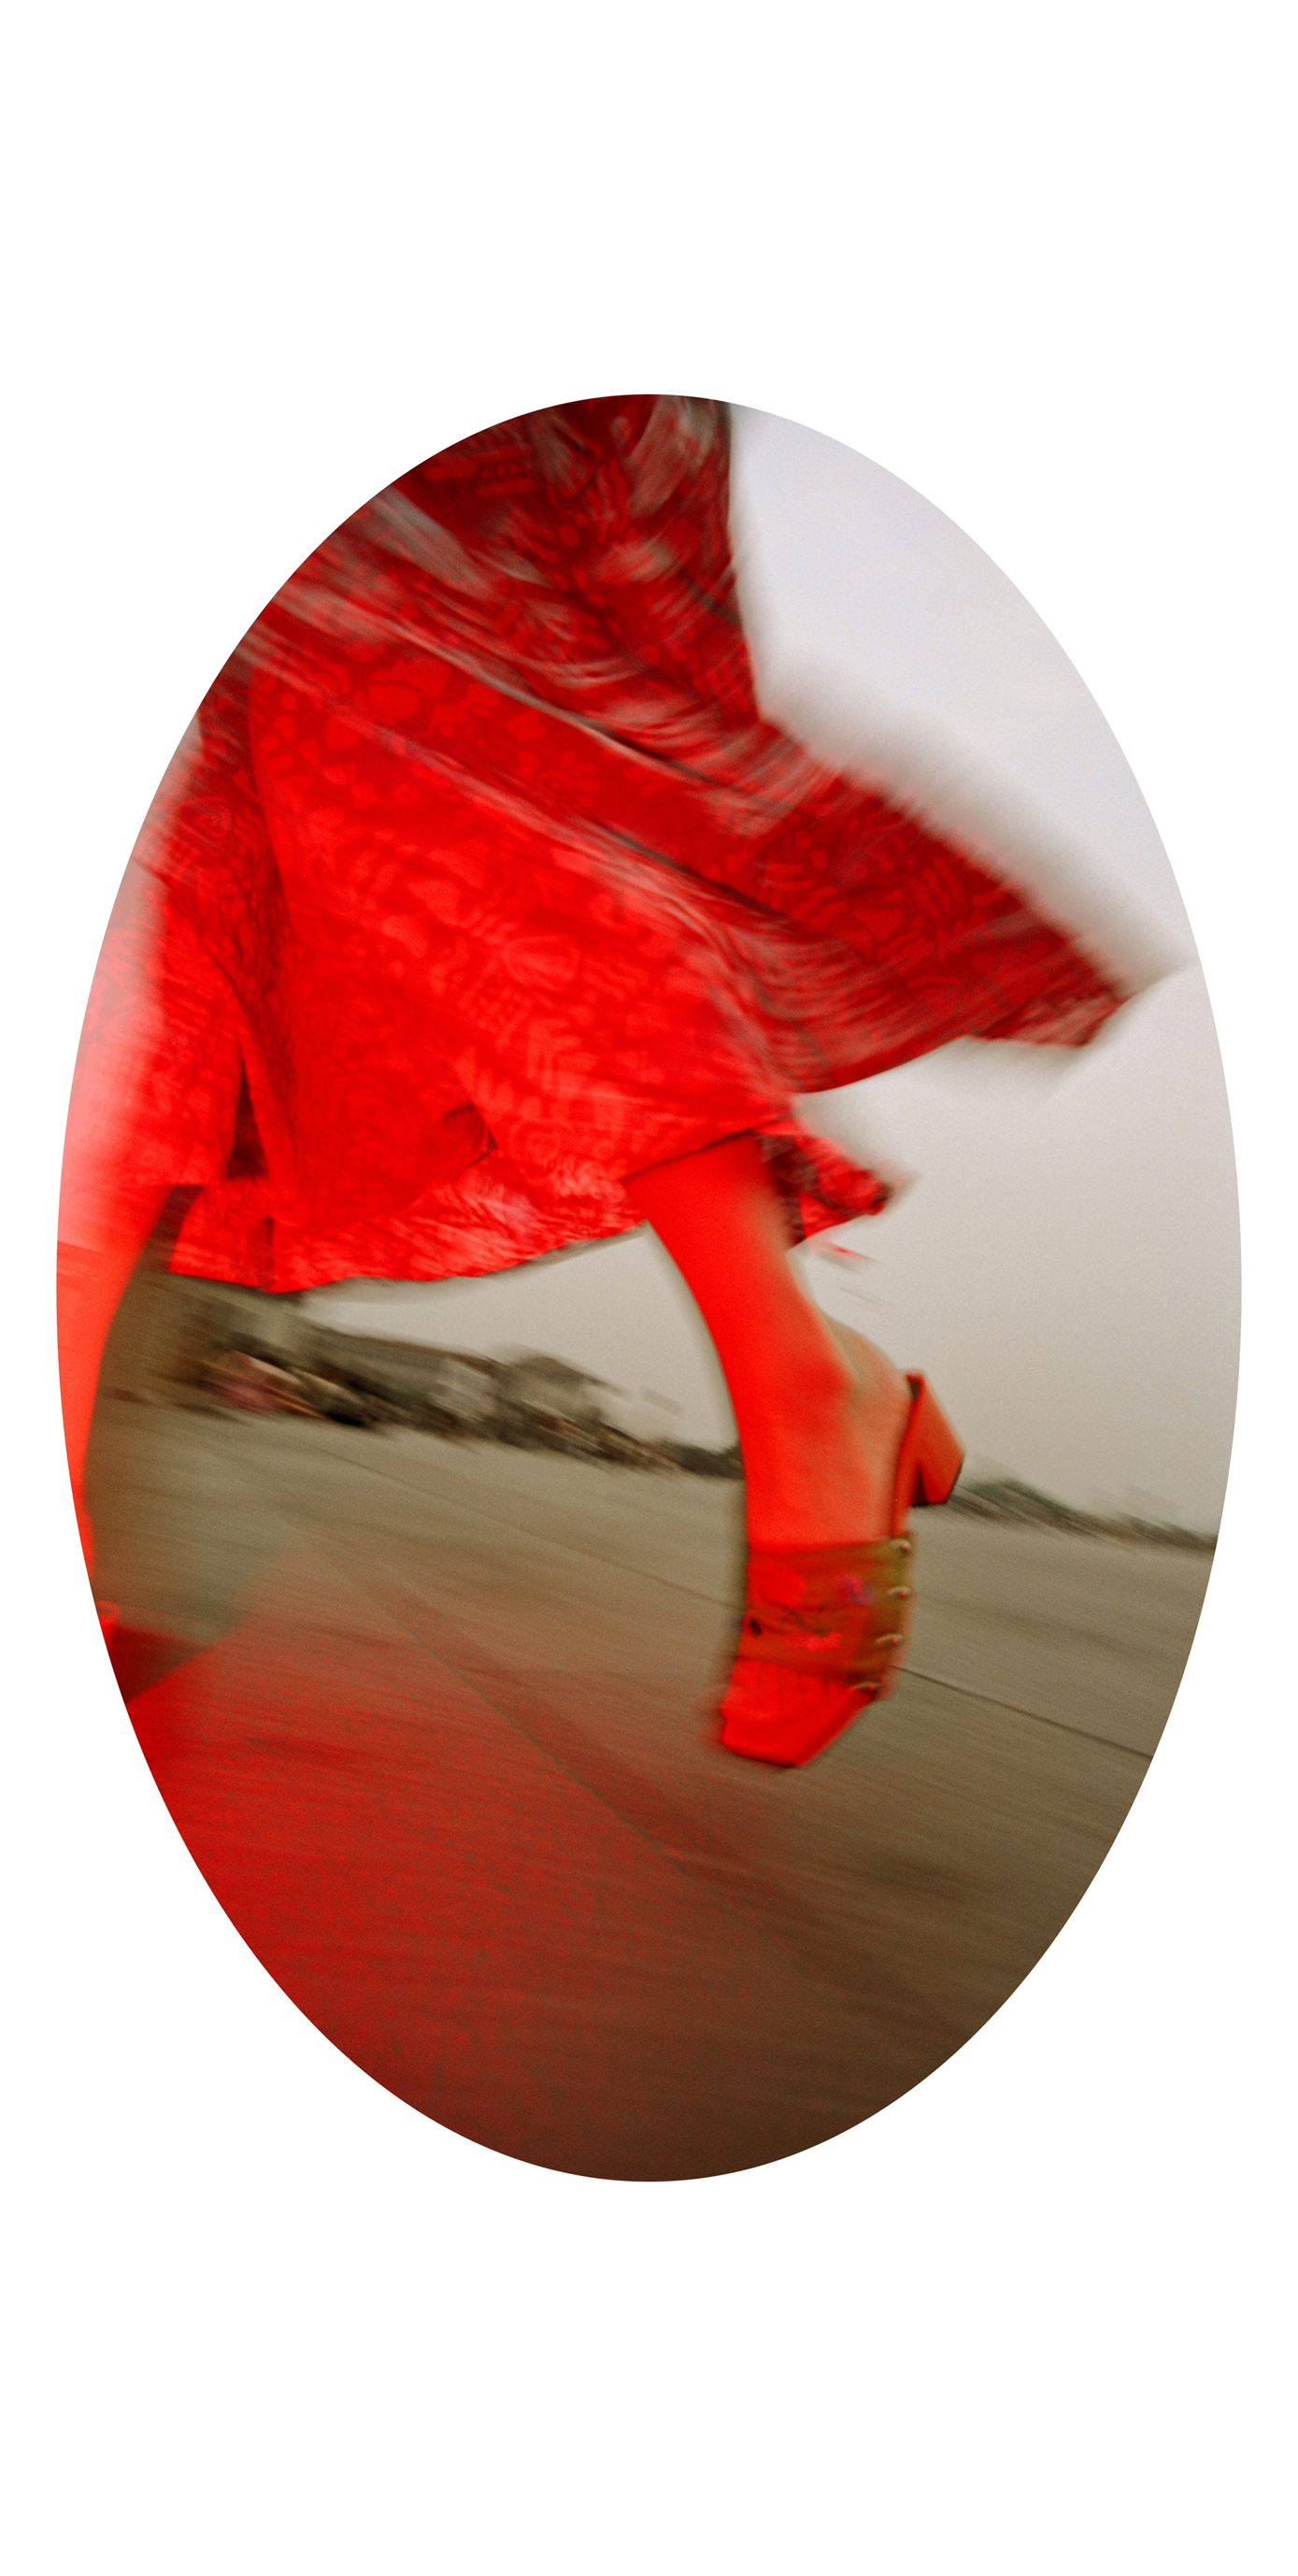 6 the unbearable lightness of Takako dress Moyi   Dog eye   Chongzi & her red skirt   07 moyi photography of china - Moyi (5) | Guest Post | Urban photography | Portrait photography - Guest Article: Moyi by Léo de Boisgisson